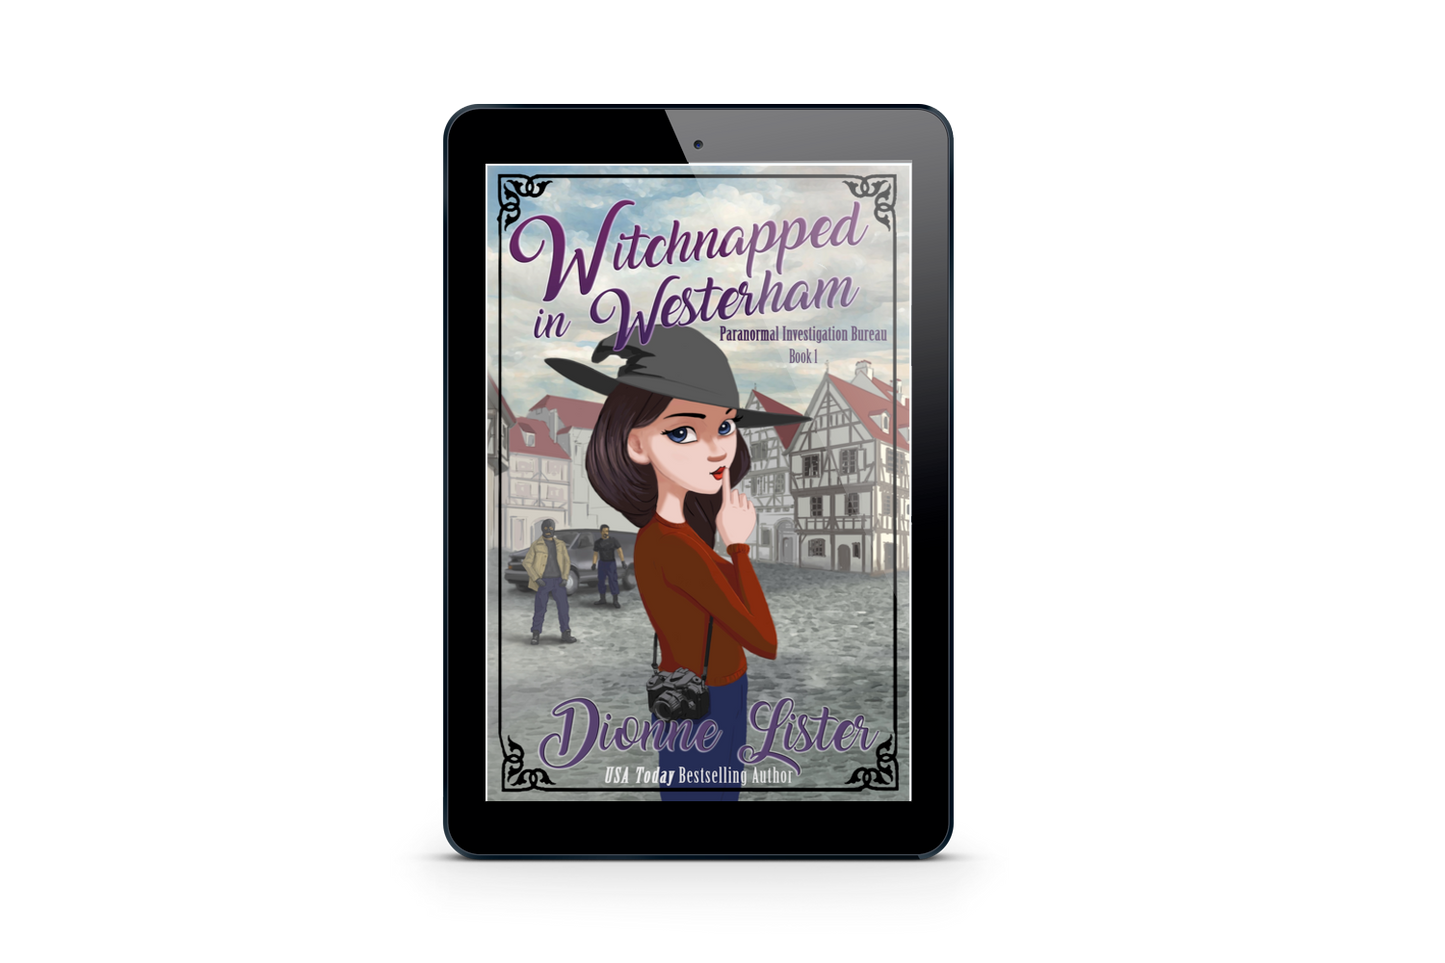 Witchnapped in Westerham—Paranormal Investigation Bureau Book 1